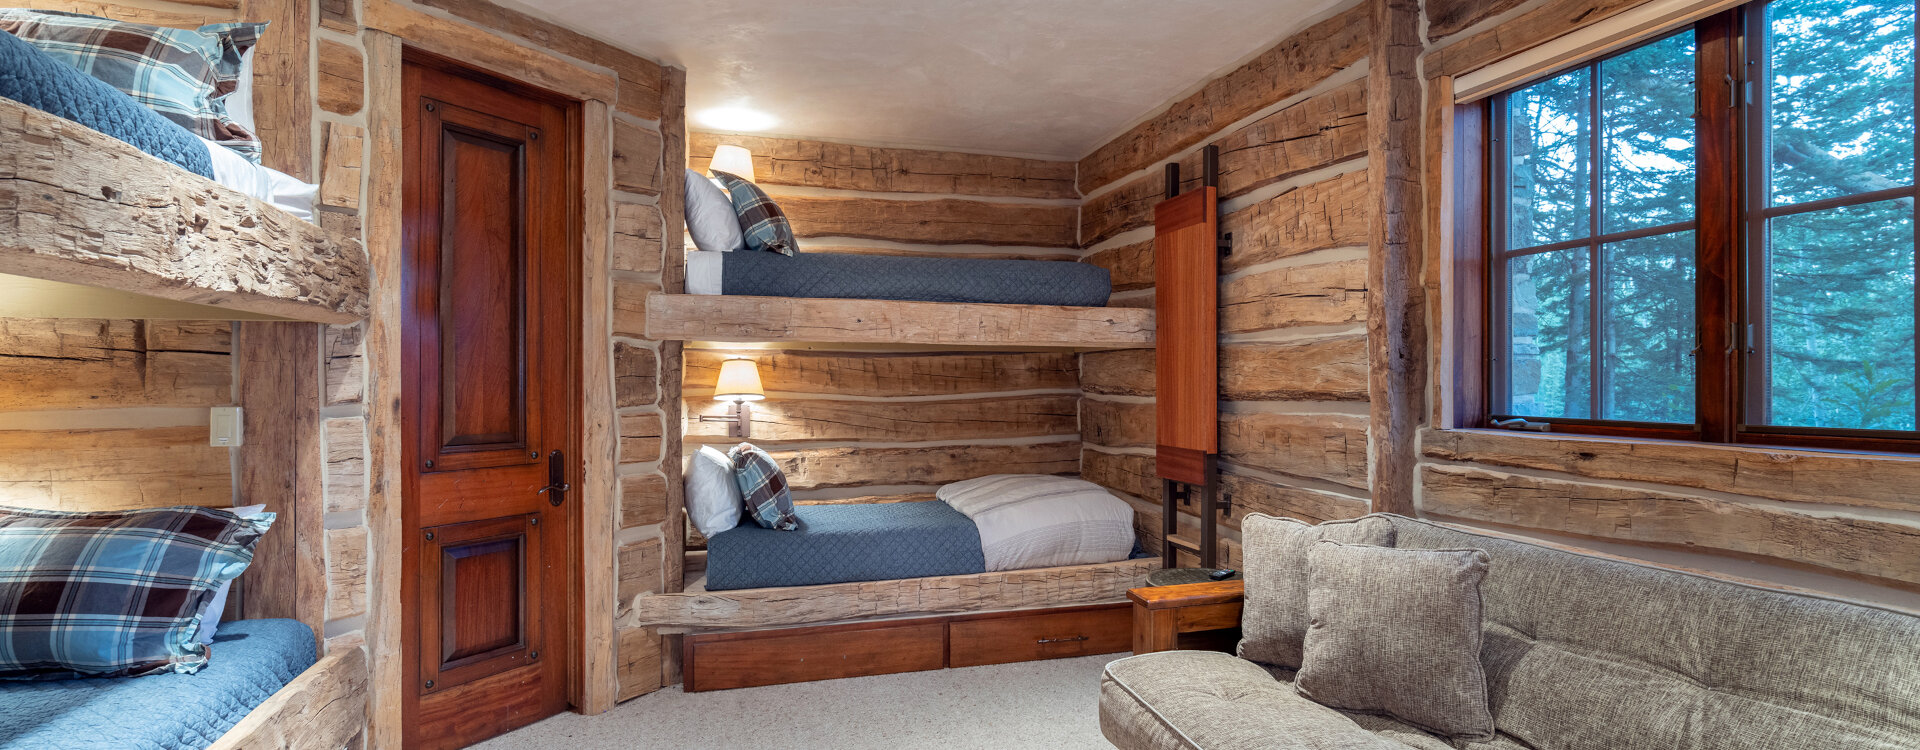 8.03-telluride-picture-perfect-bunk-room